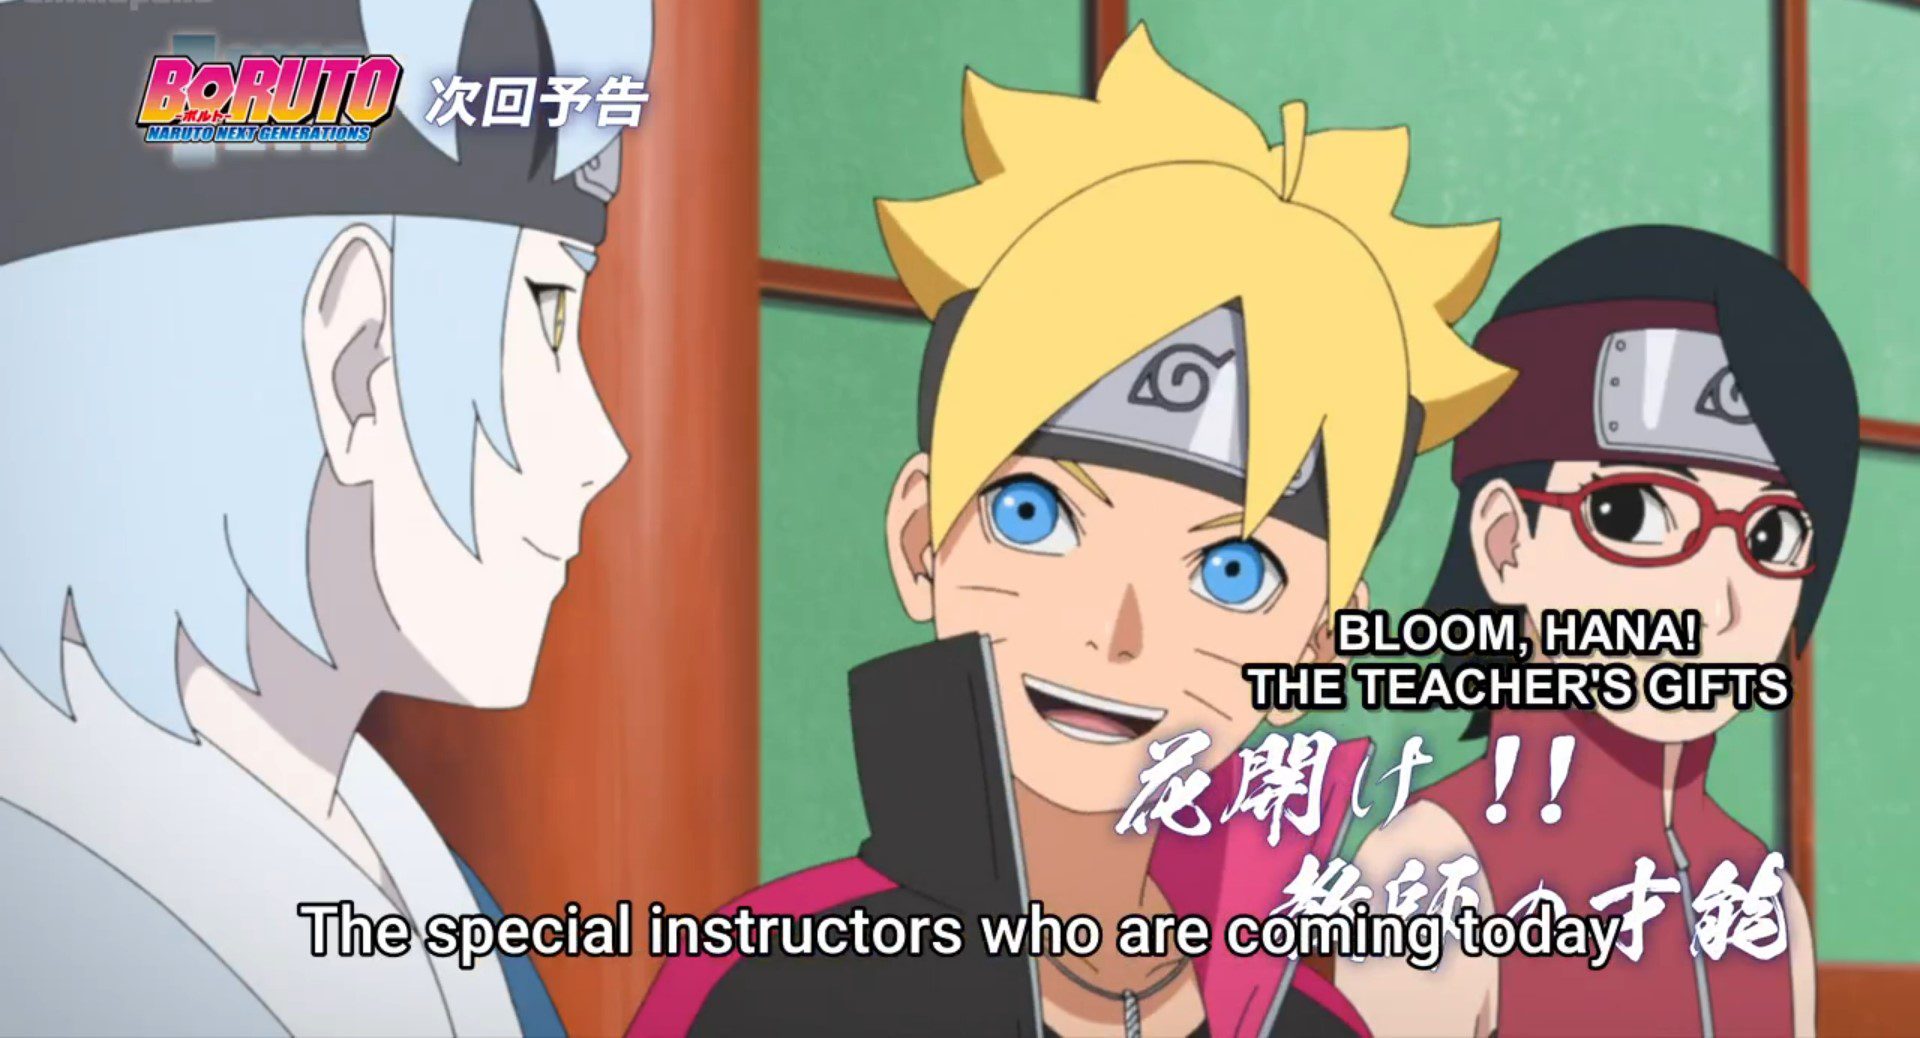 Boruto: Naruto Next Generations Episode 263 Preview